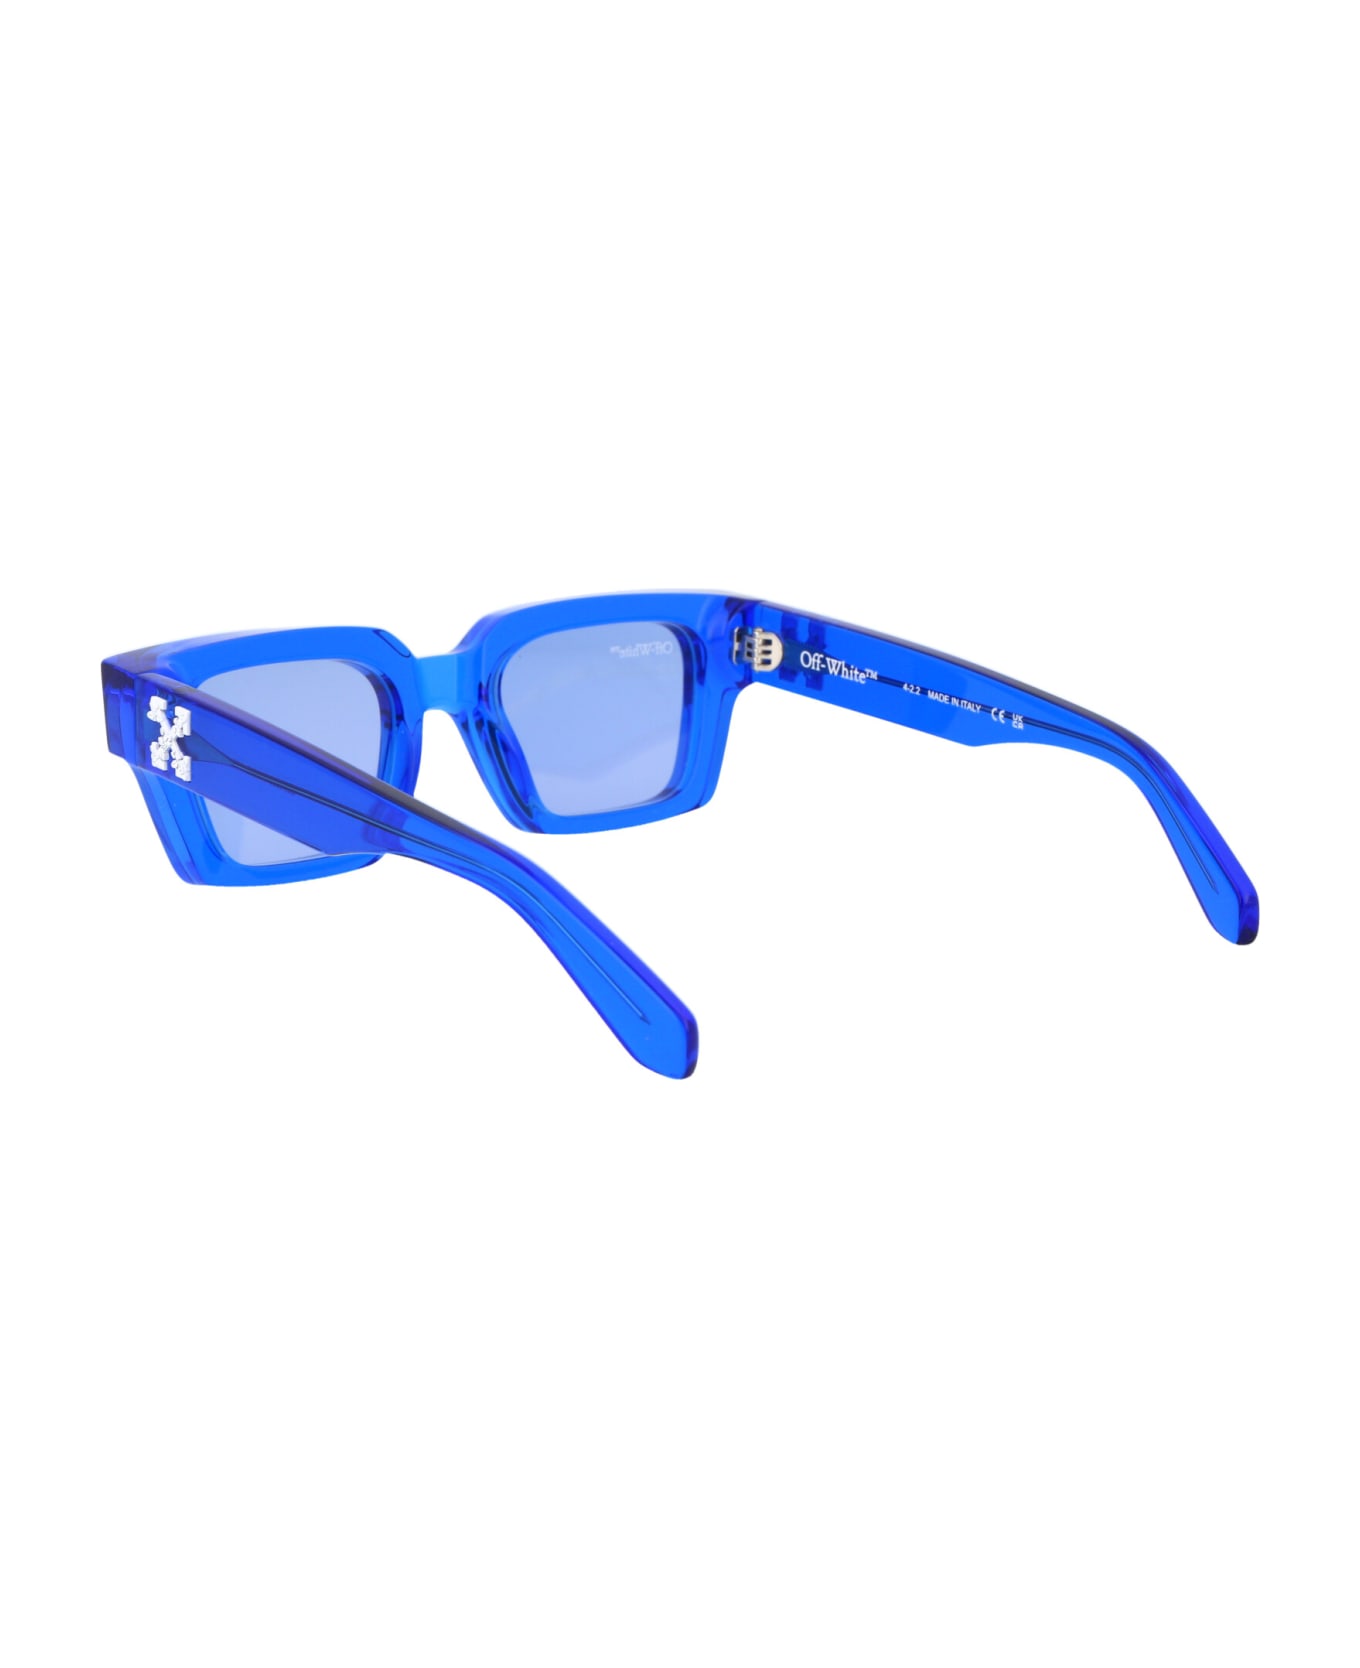 Off-White Virgil Sunglasses Laurent - 4545 CRYSTAL BLUE